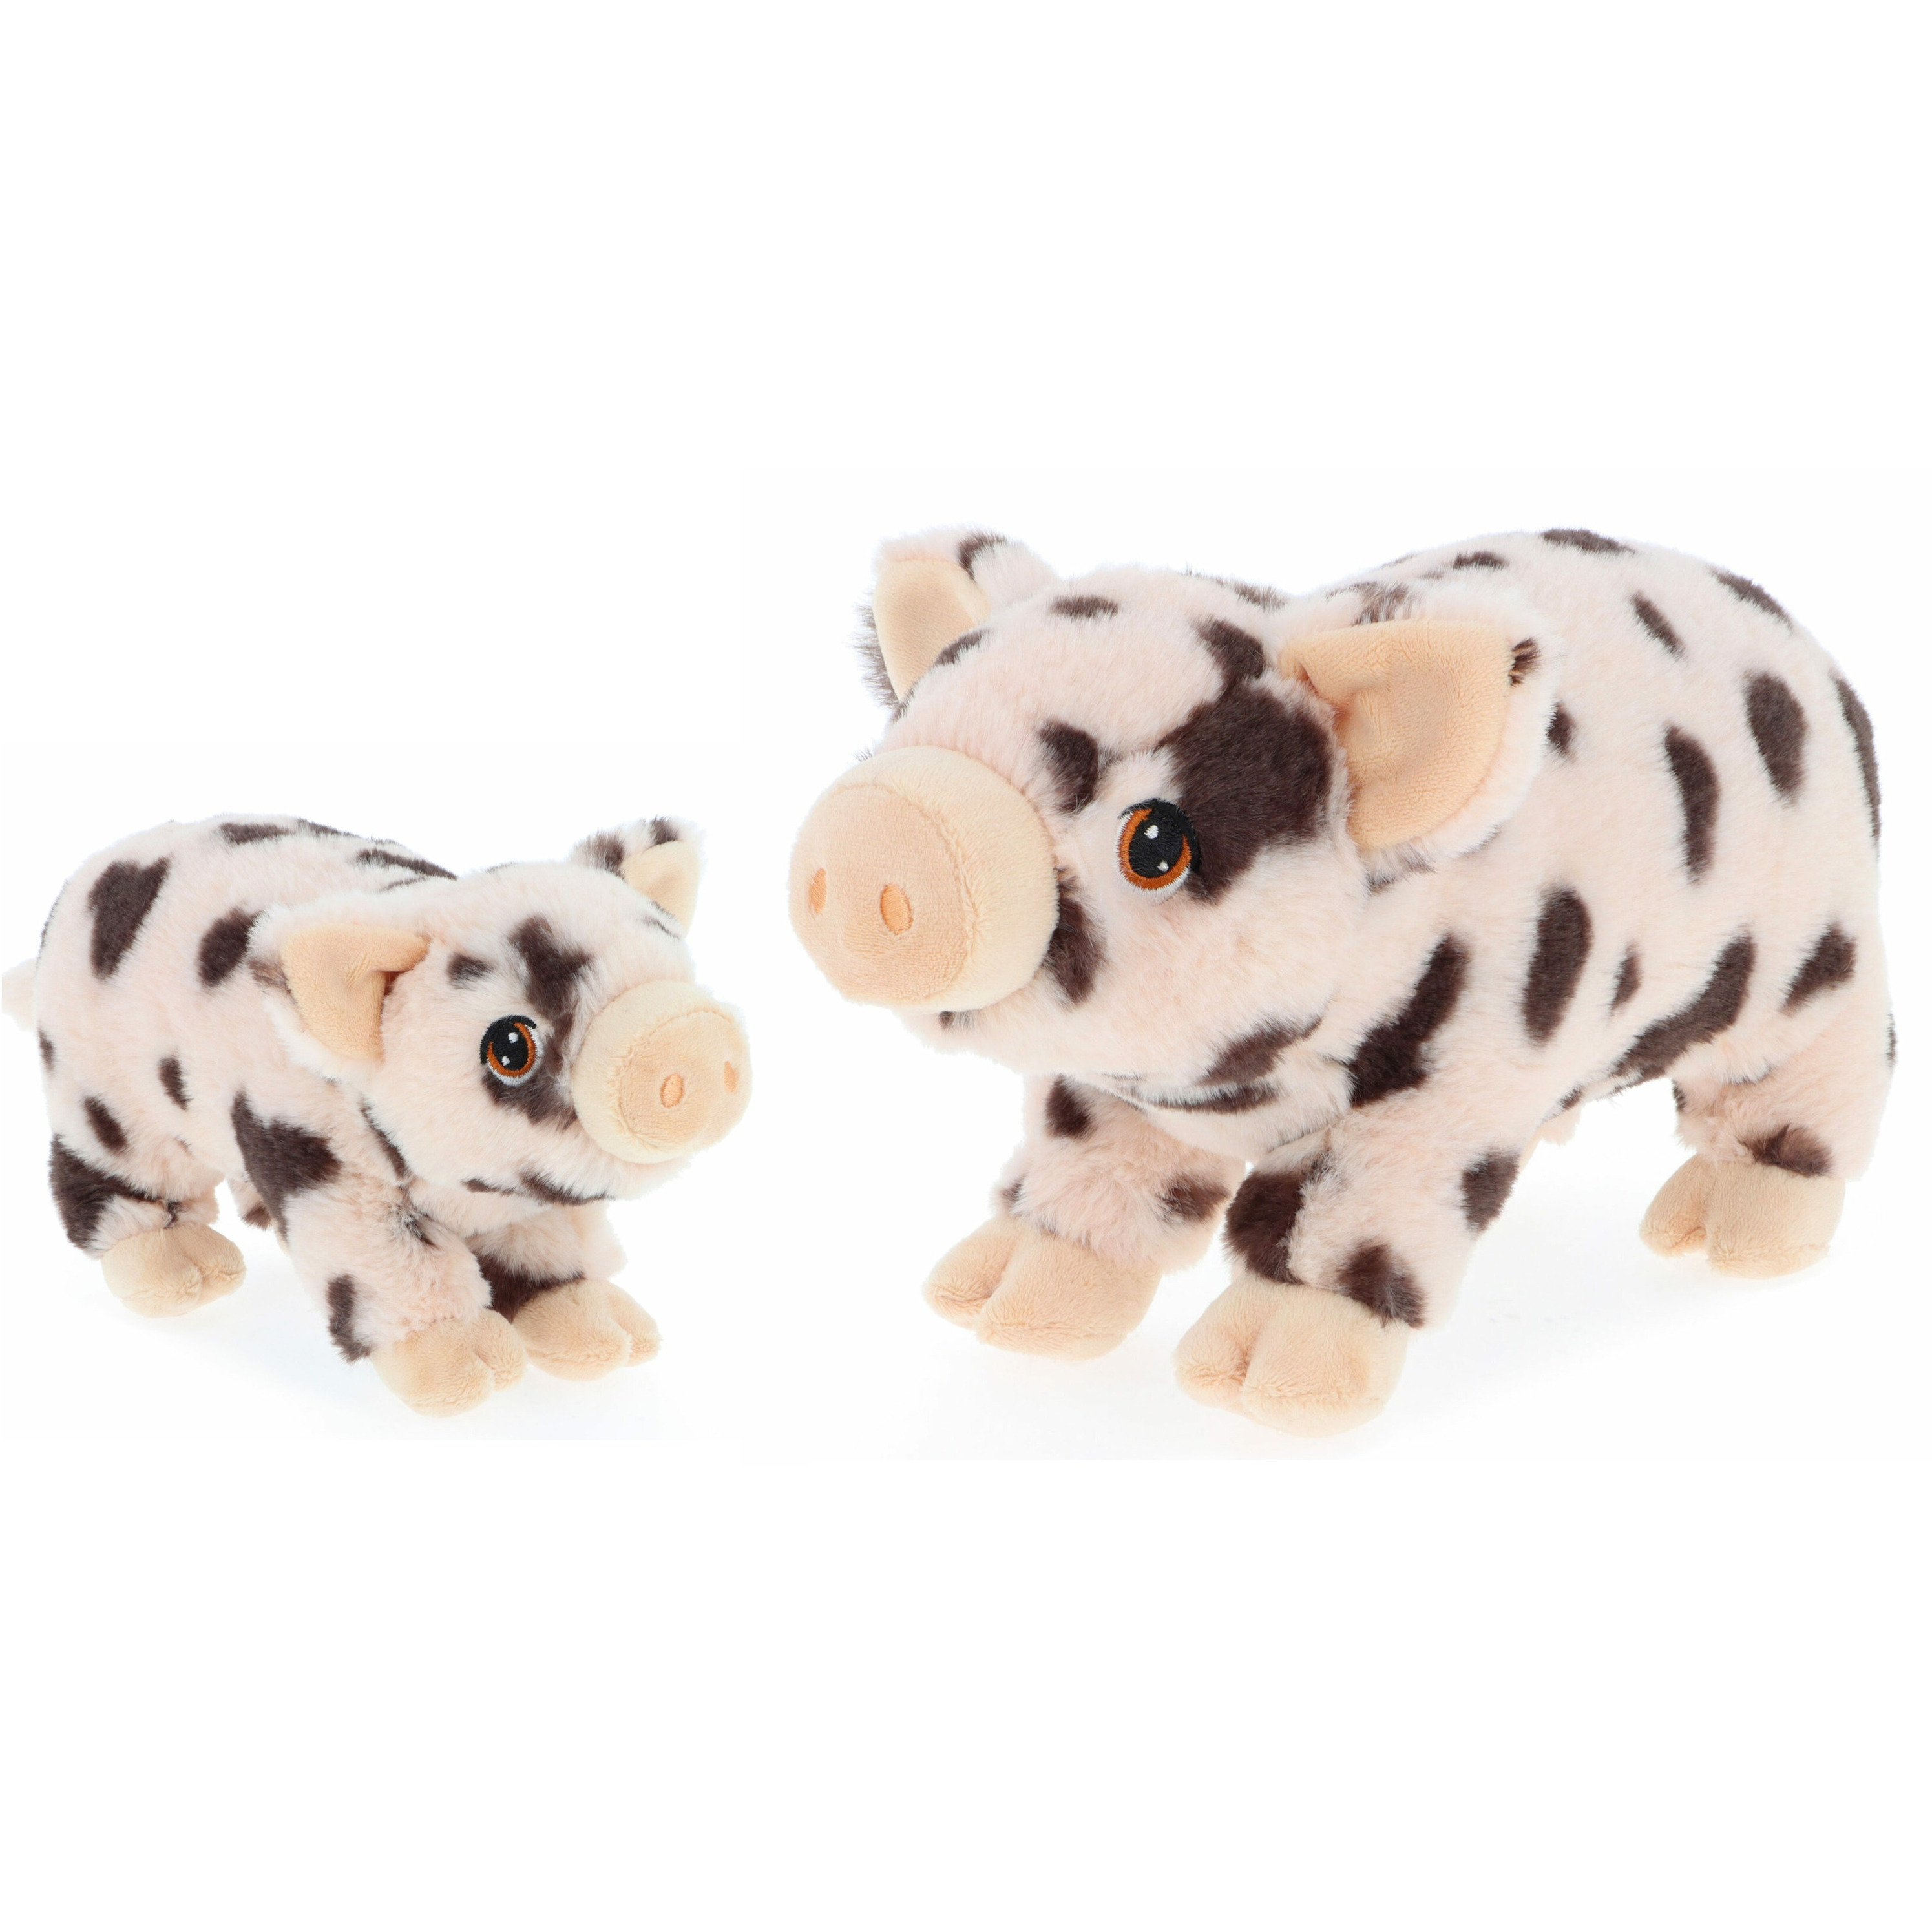 Merkloos Keel Toys pluche varkens knuffeldieren - gevlekt roze - staand - 18 en 28 cm -